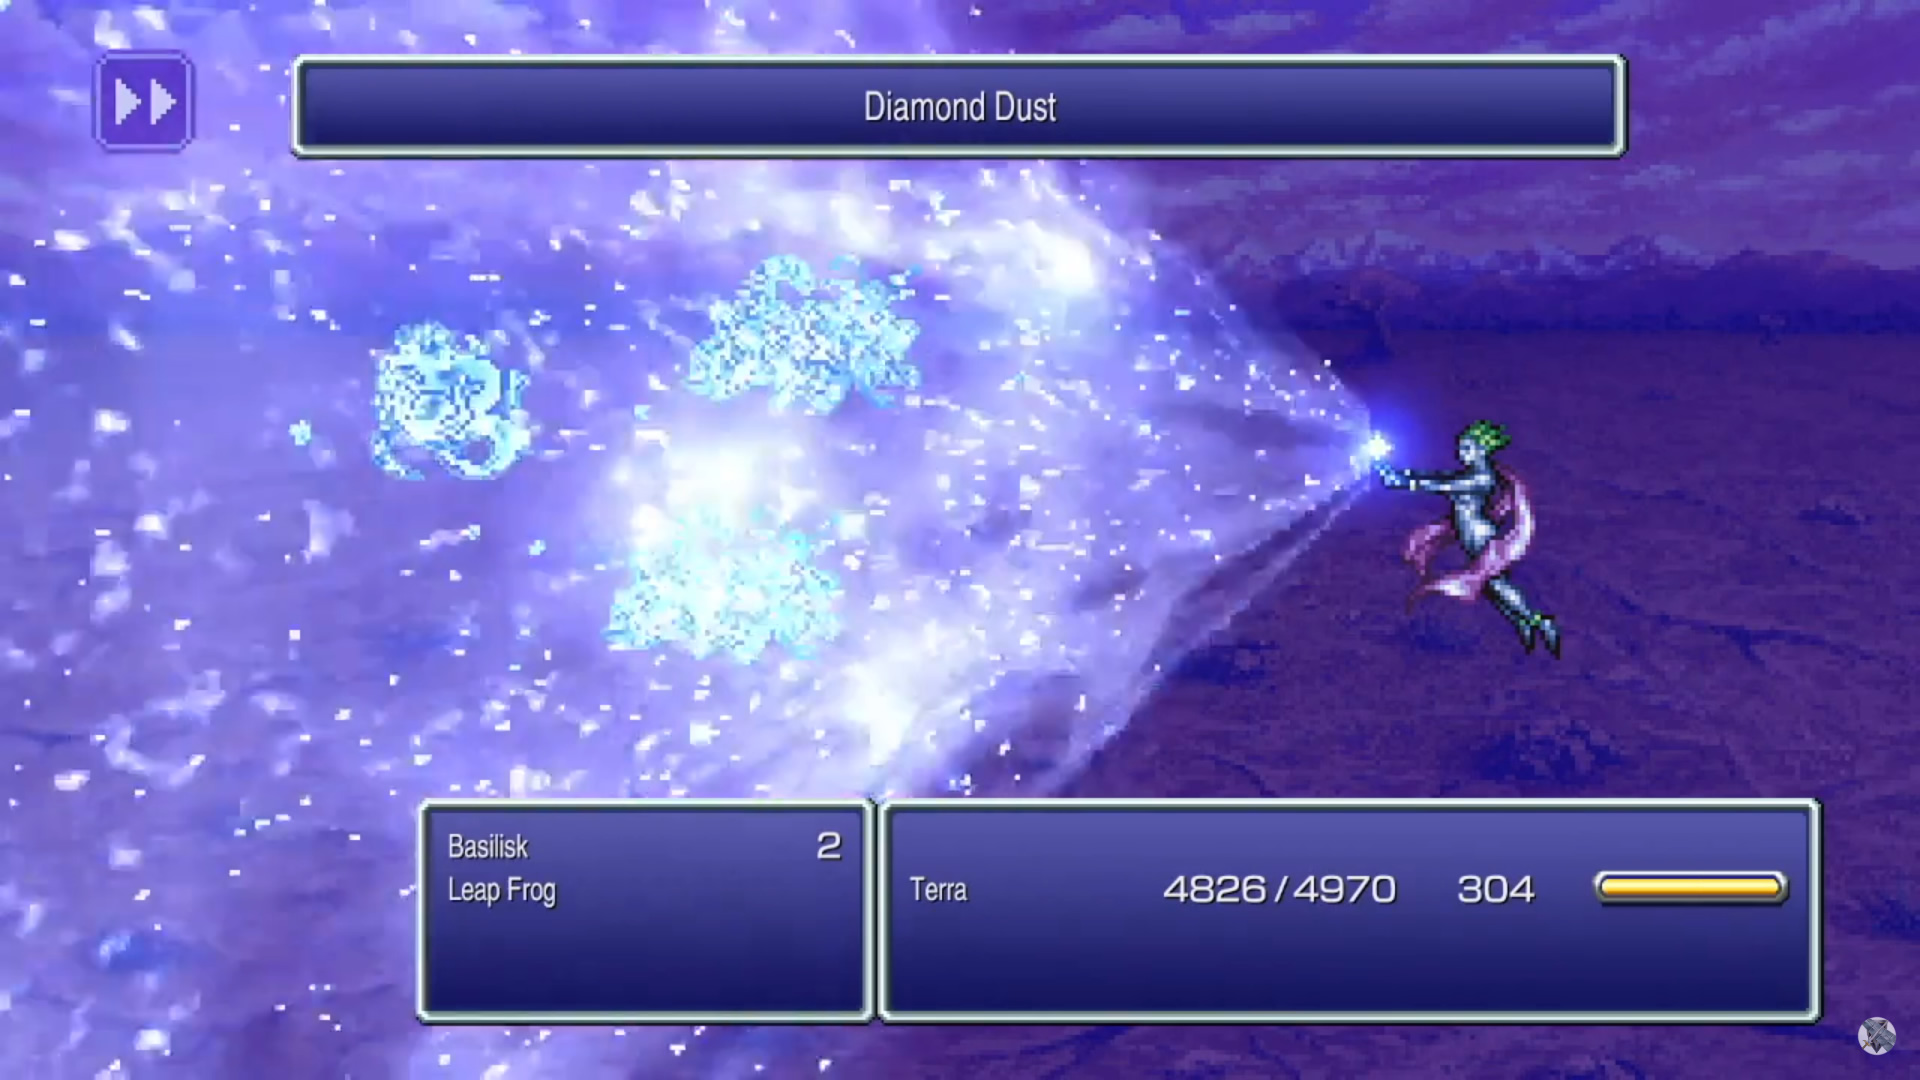 Final Fantasy VI - Pixel Remaster Walkthrough •